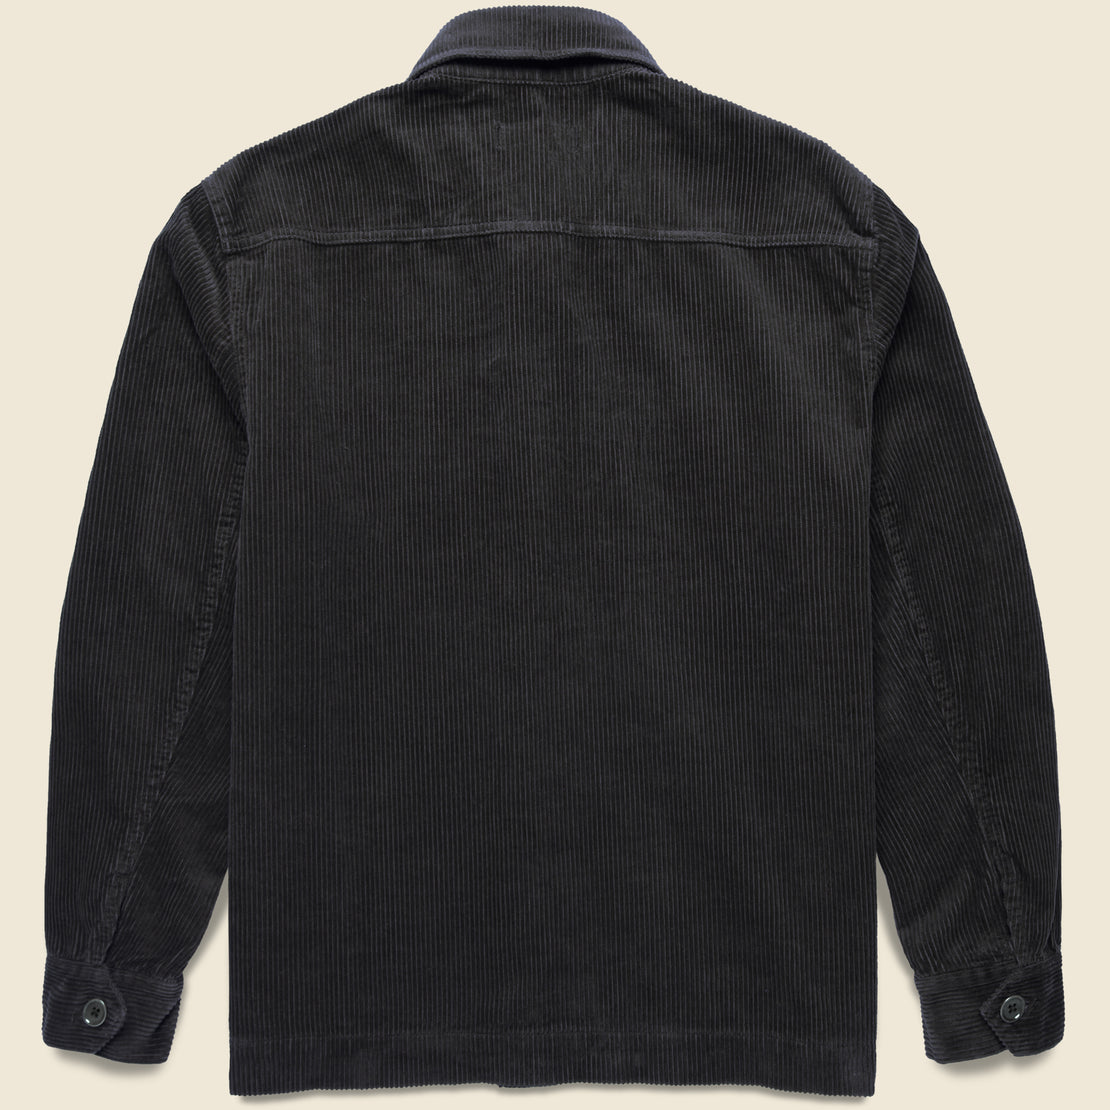 Corduroy Work Jacket - Black - Alex Mill - STAG Provisions - Outerwear - Coat / Jacket